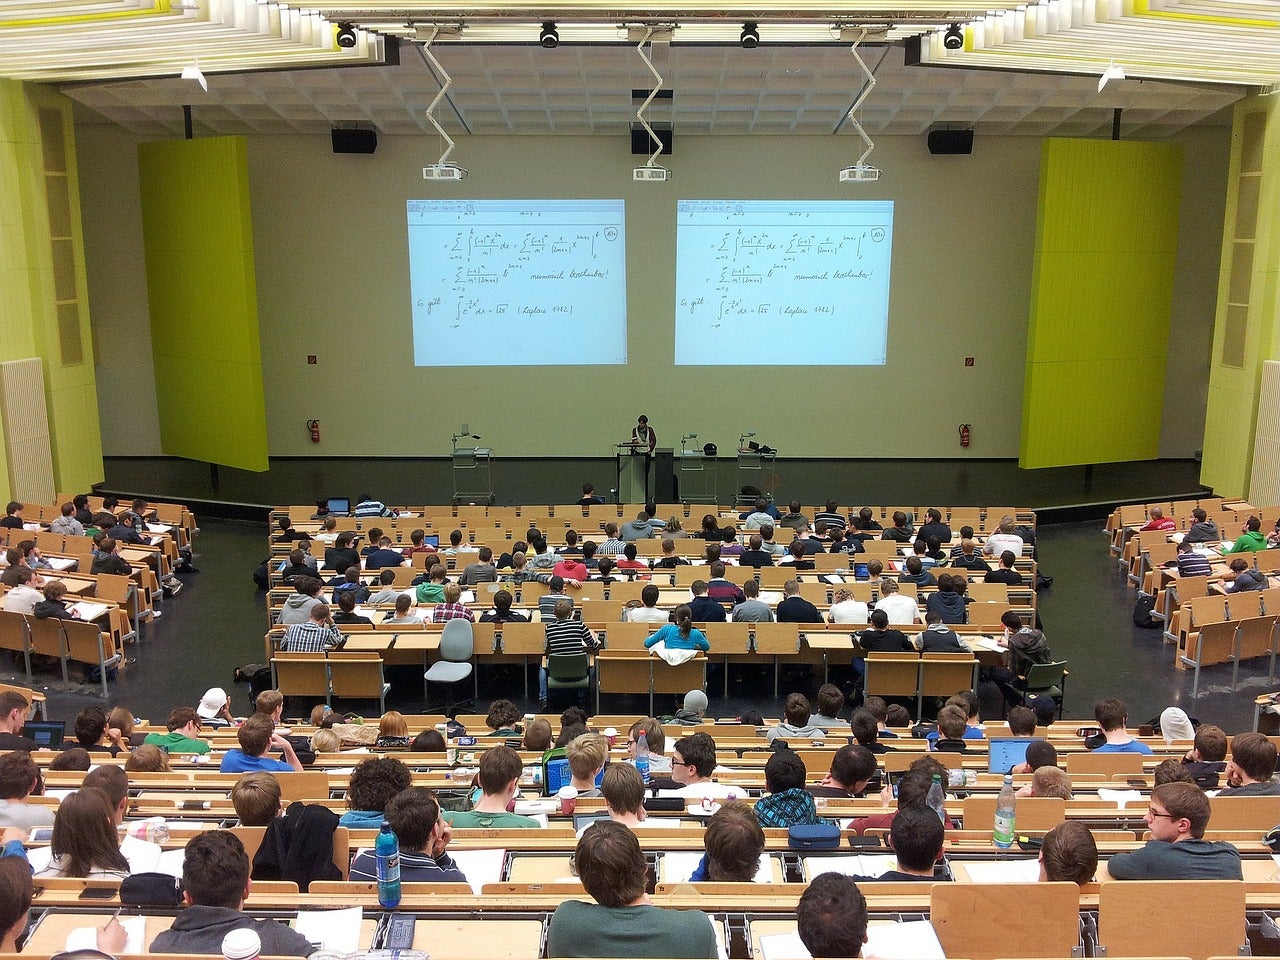 A university classroom